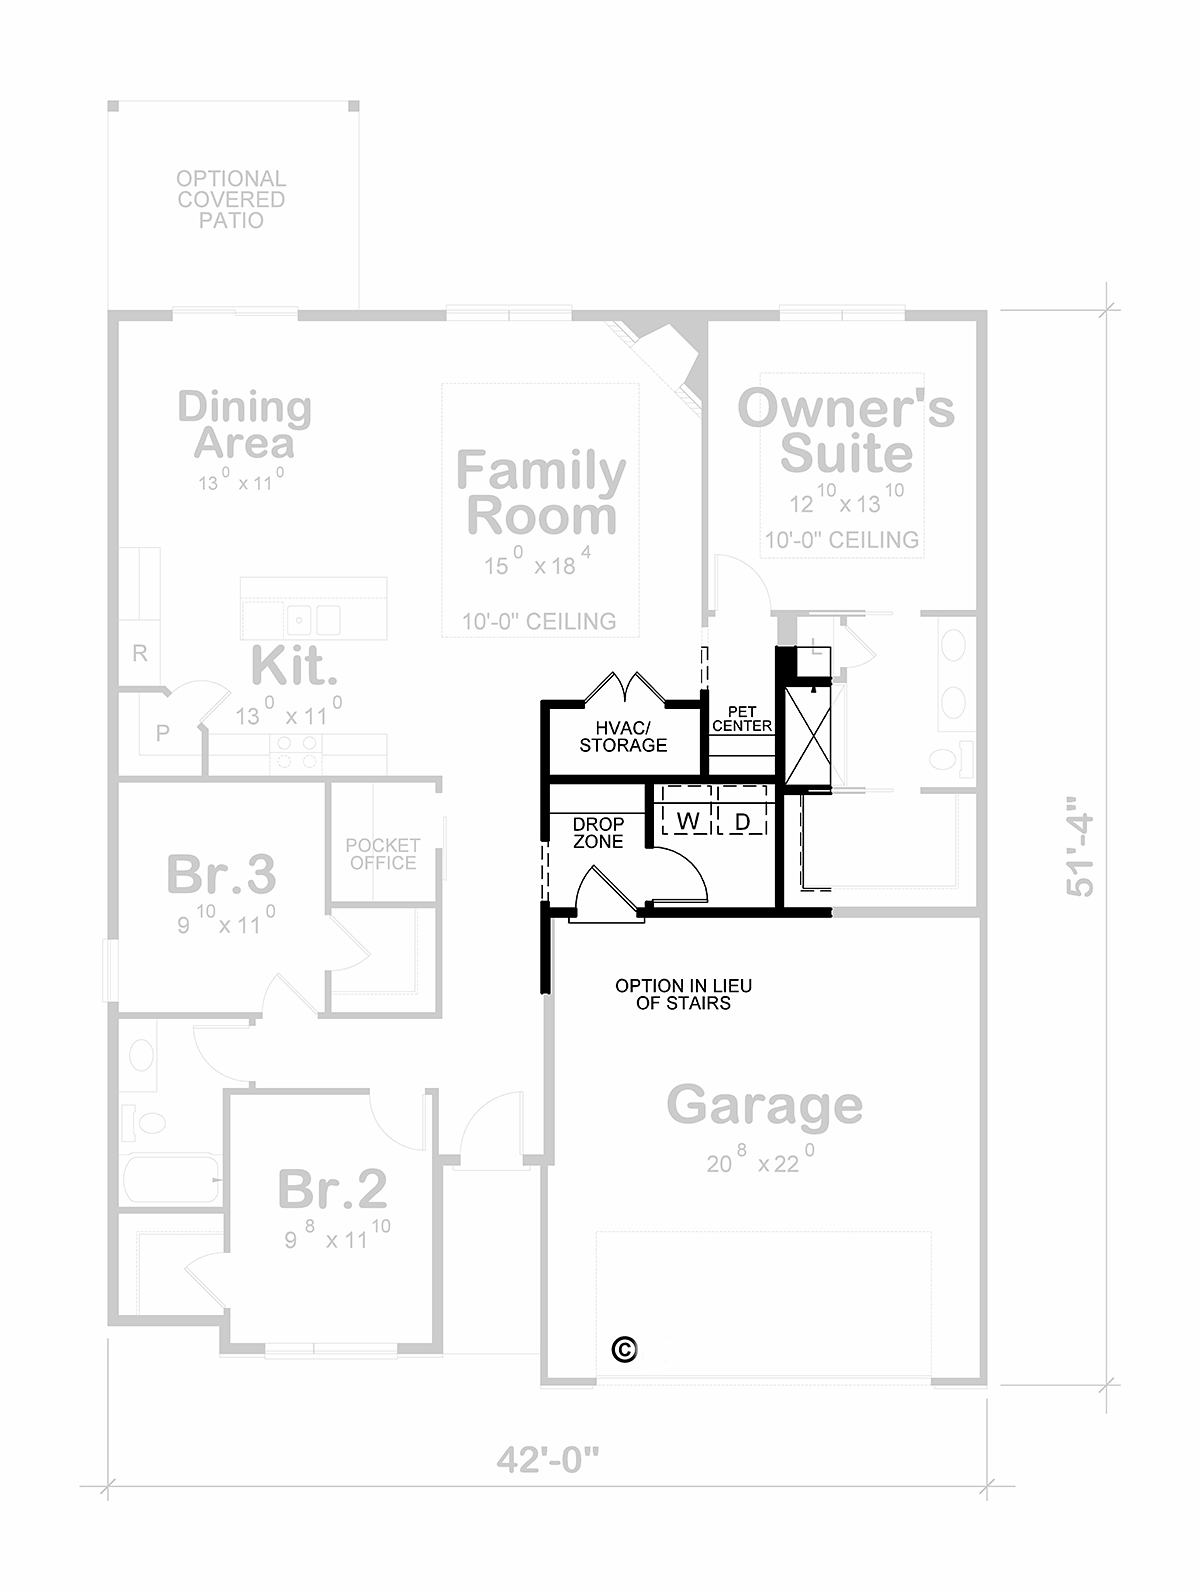 House Plan 81471 Alternate Level One